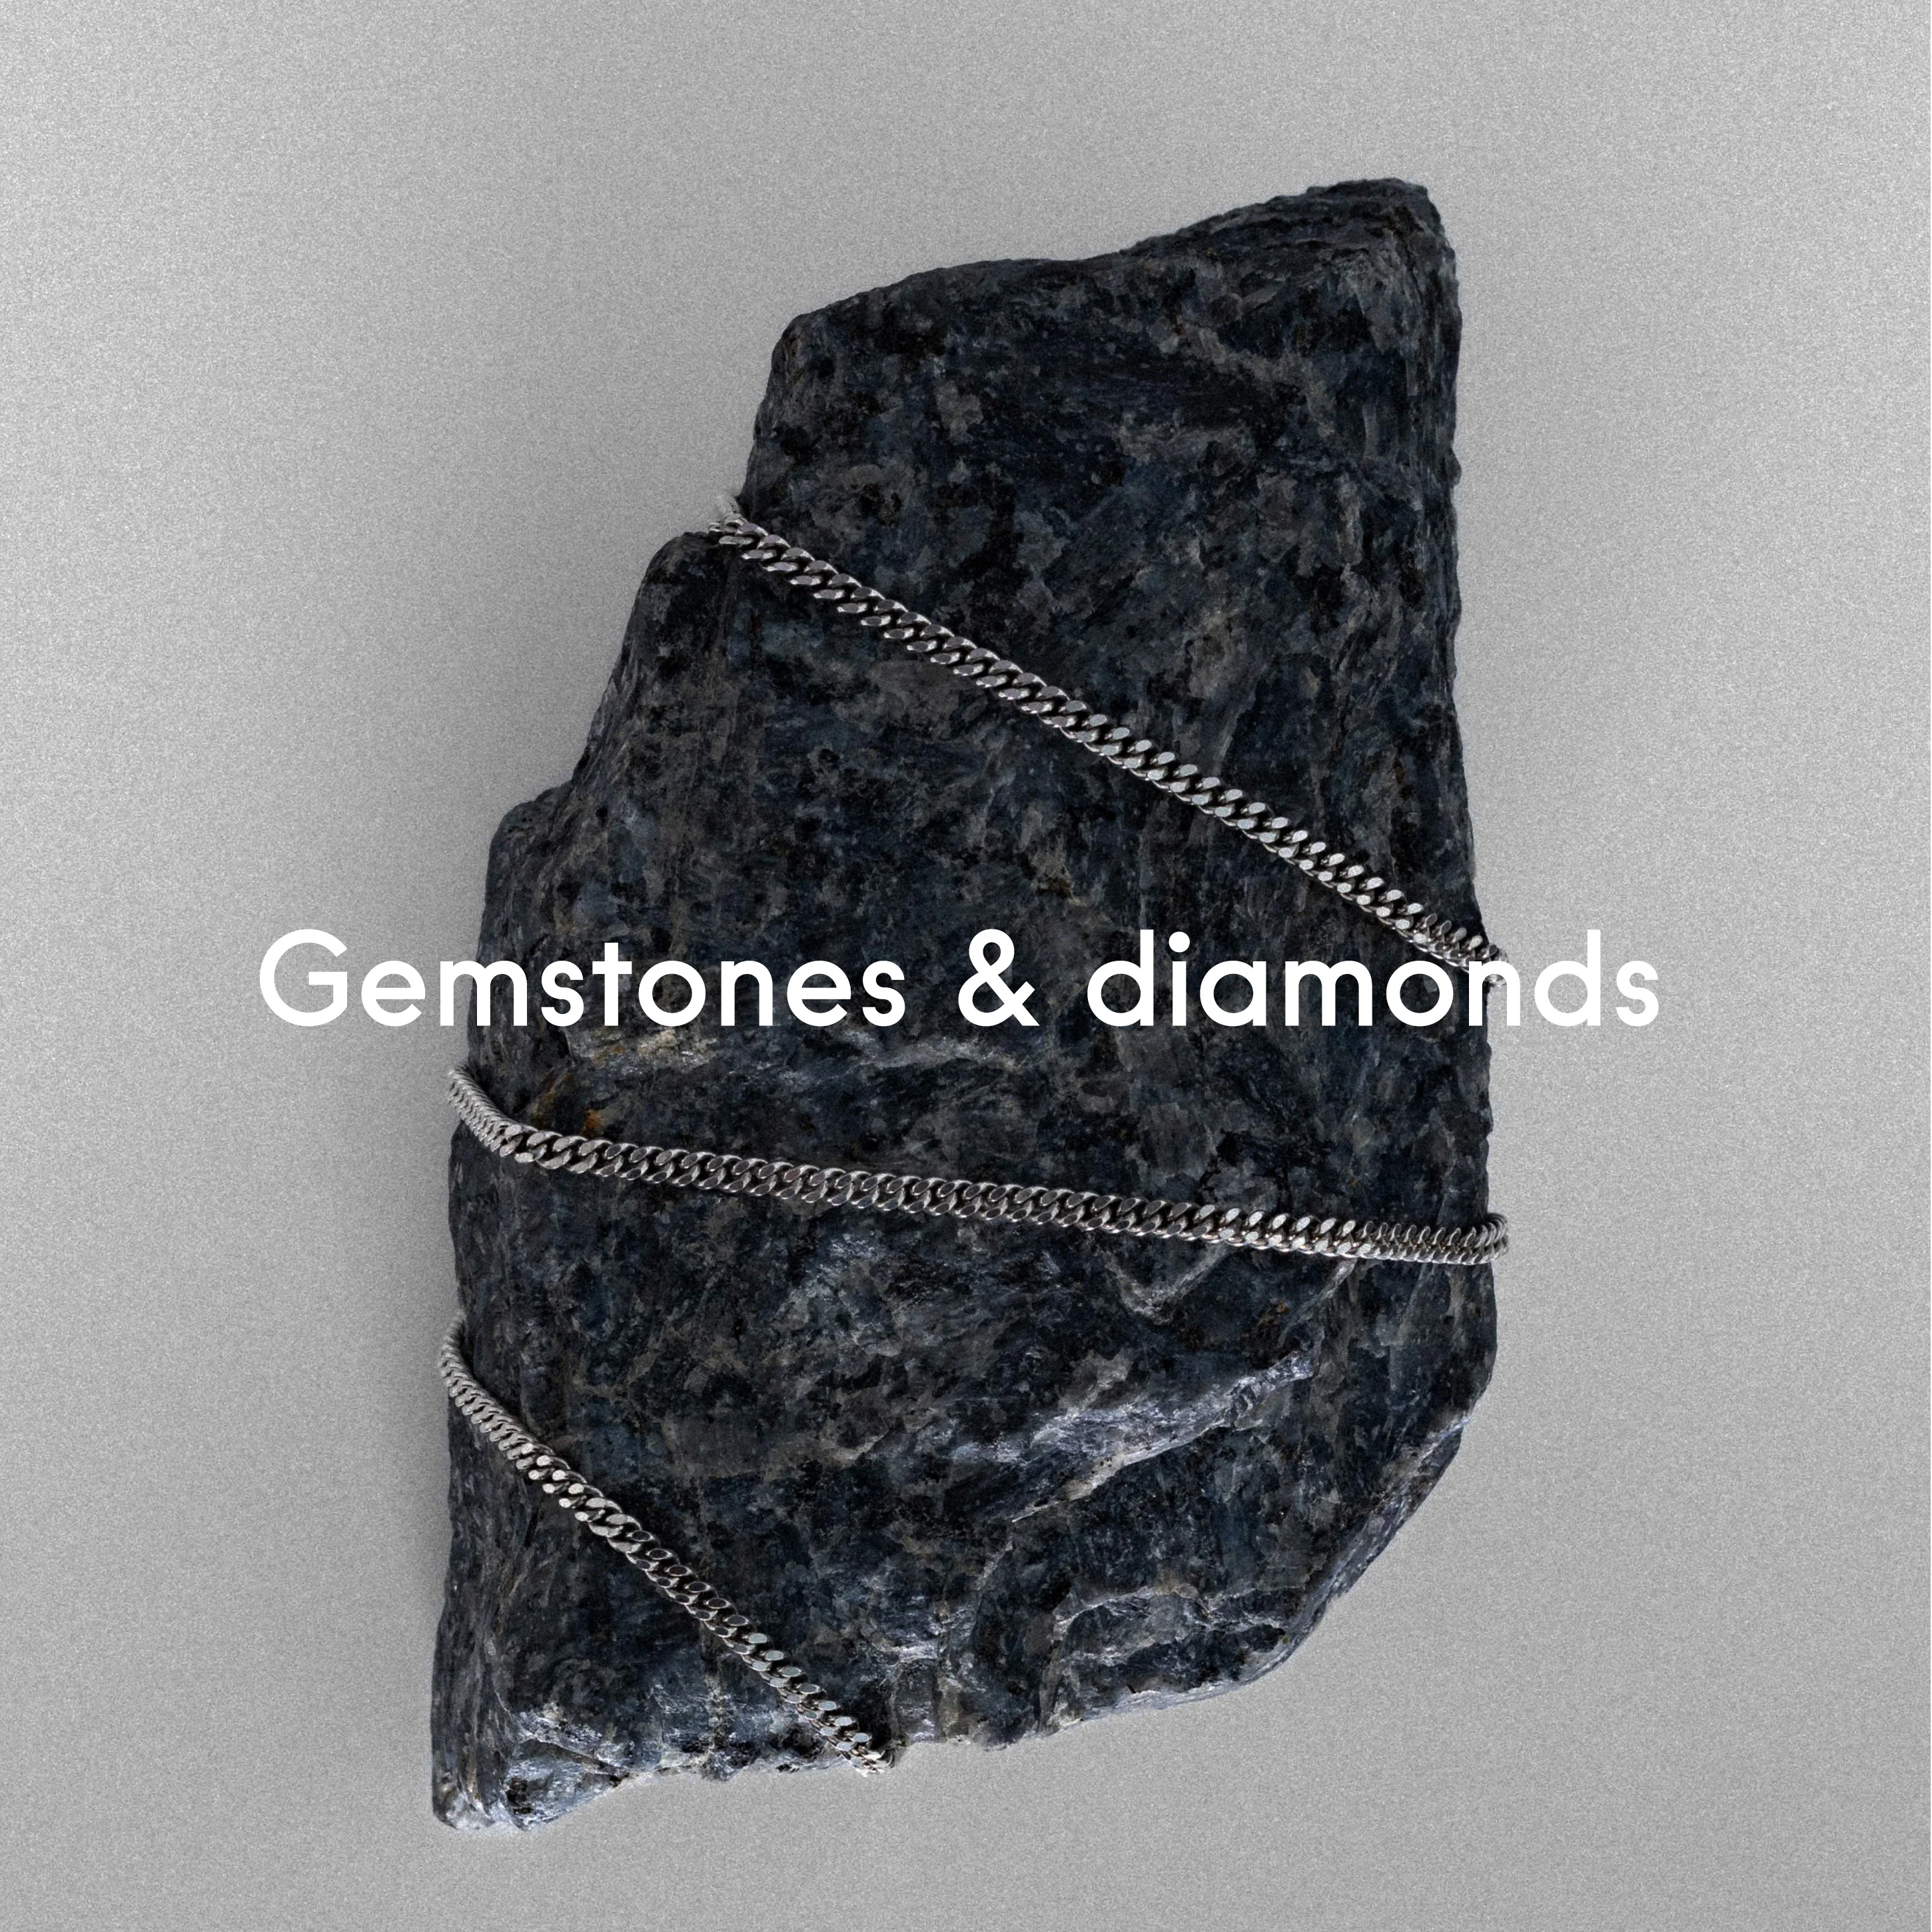 Gemstones & diamonds